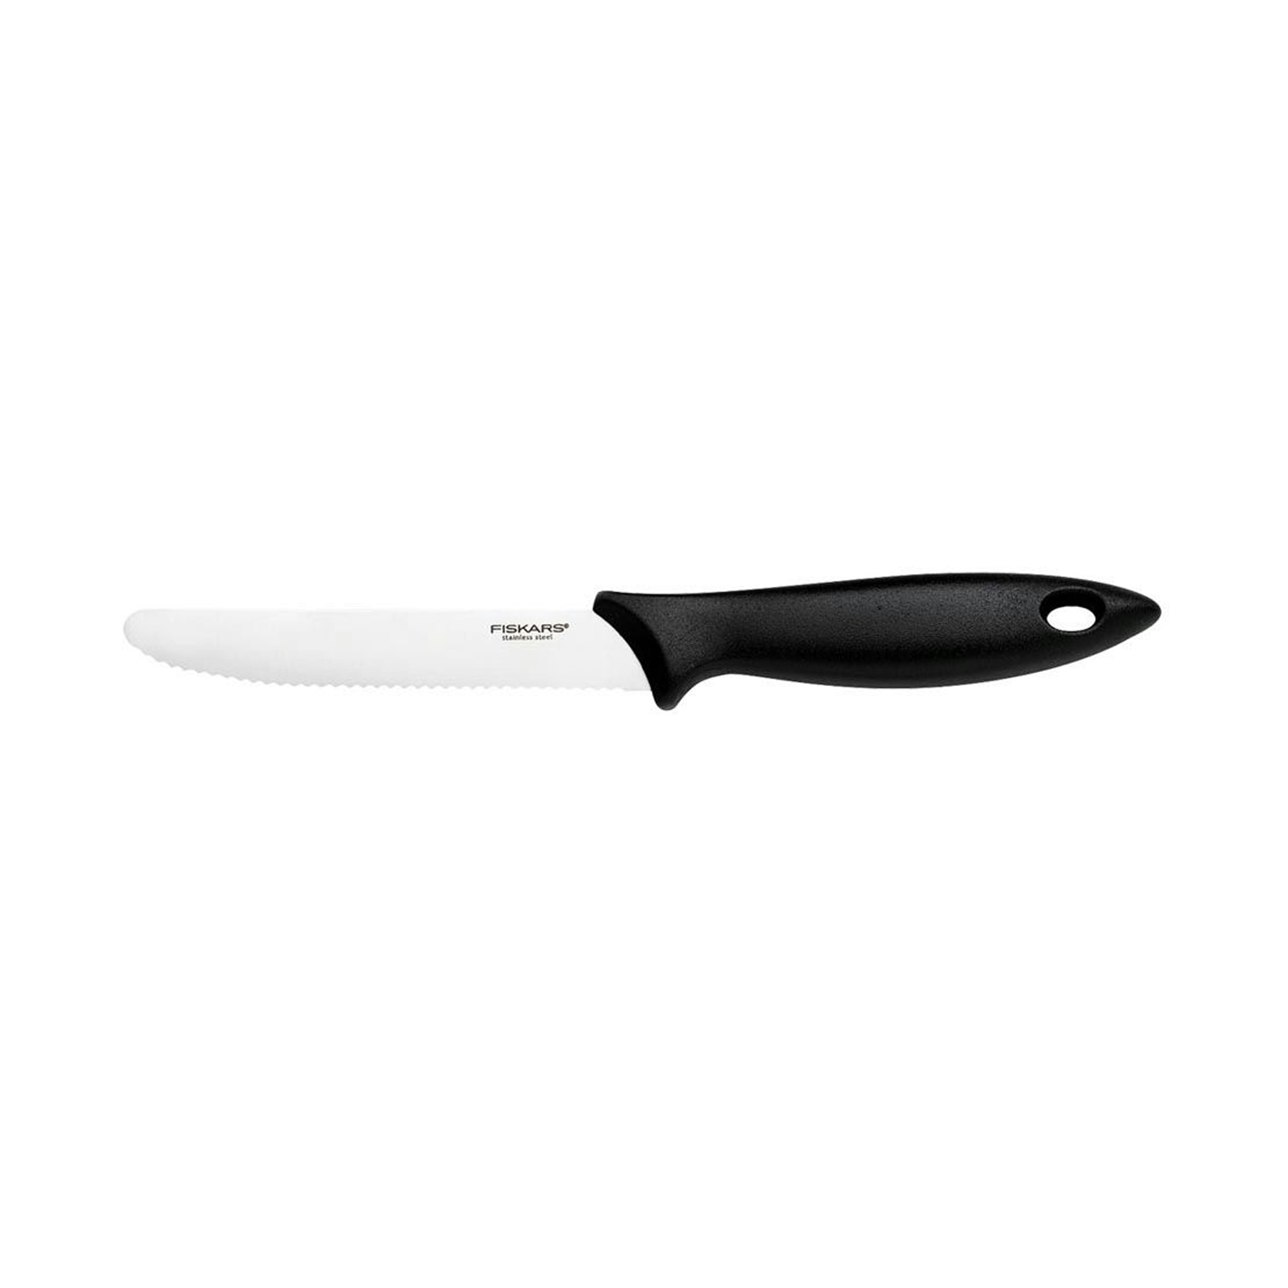 https://royaldesign.com/image/2/fiskars-essential-tomato-knife-12-cm-1?w=800&quality=80